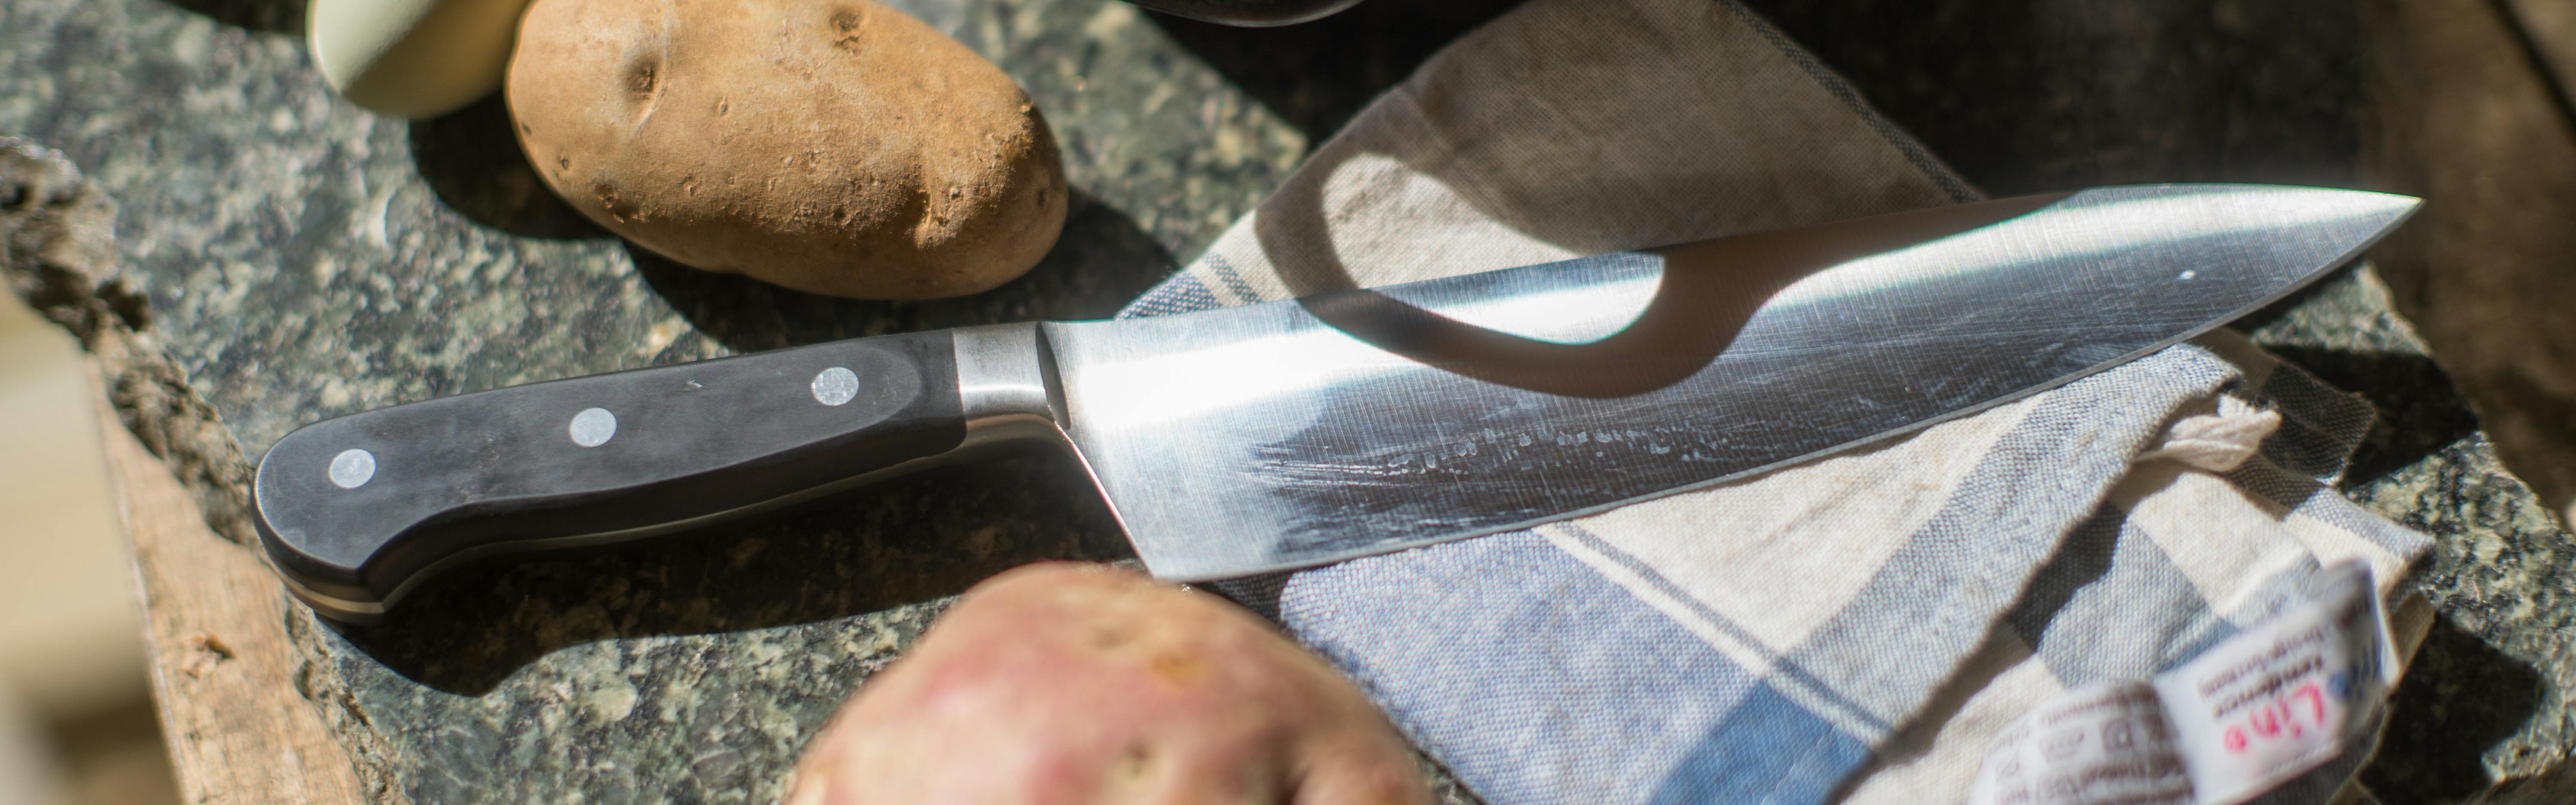 Expert Review: Mercer Millennia 8-Inch Chef's Knife